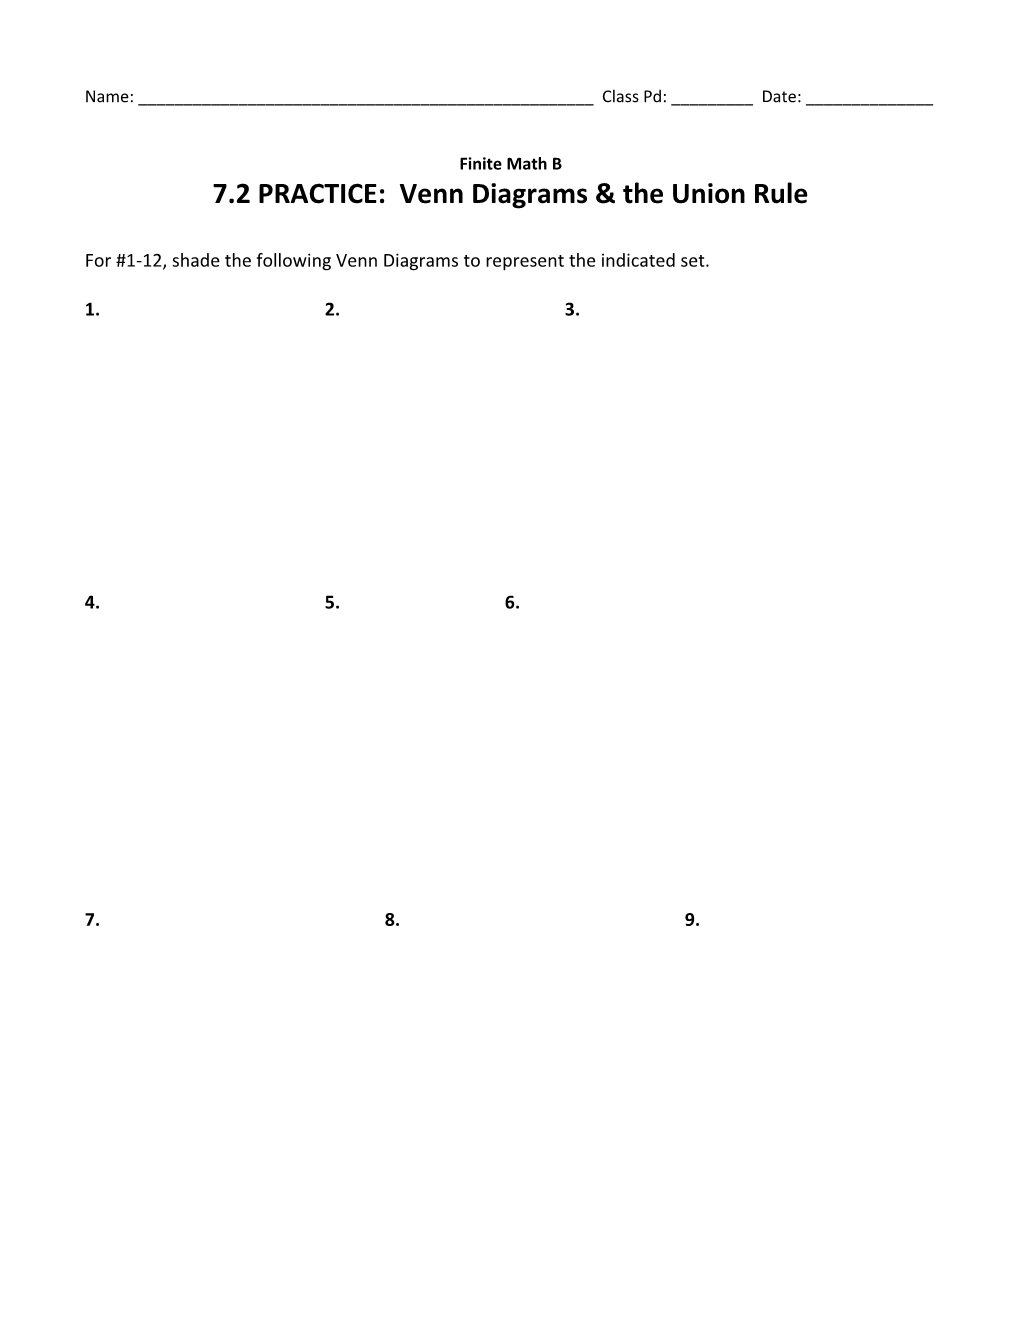 7.2 PRACTICE: Venn Diagrams & the Union Rule